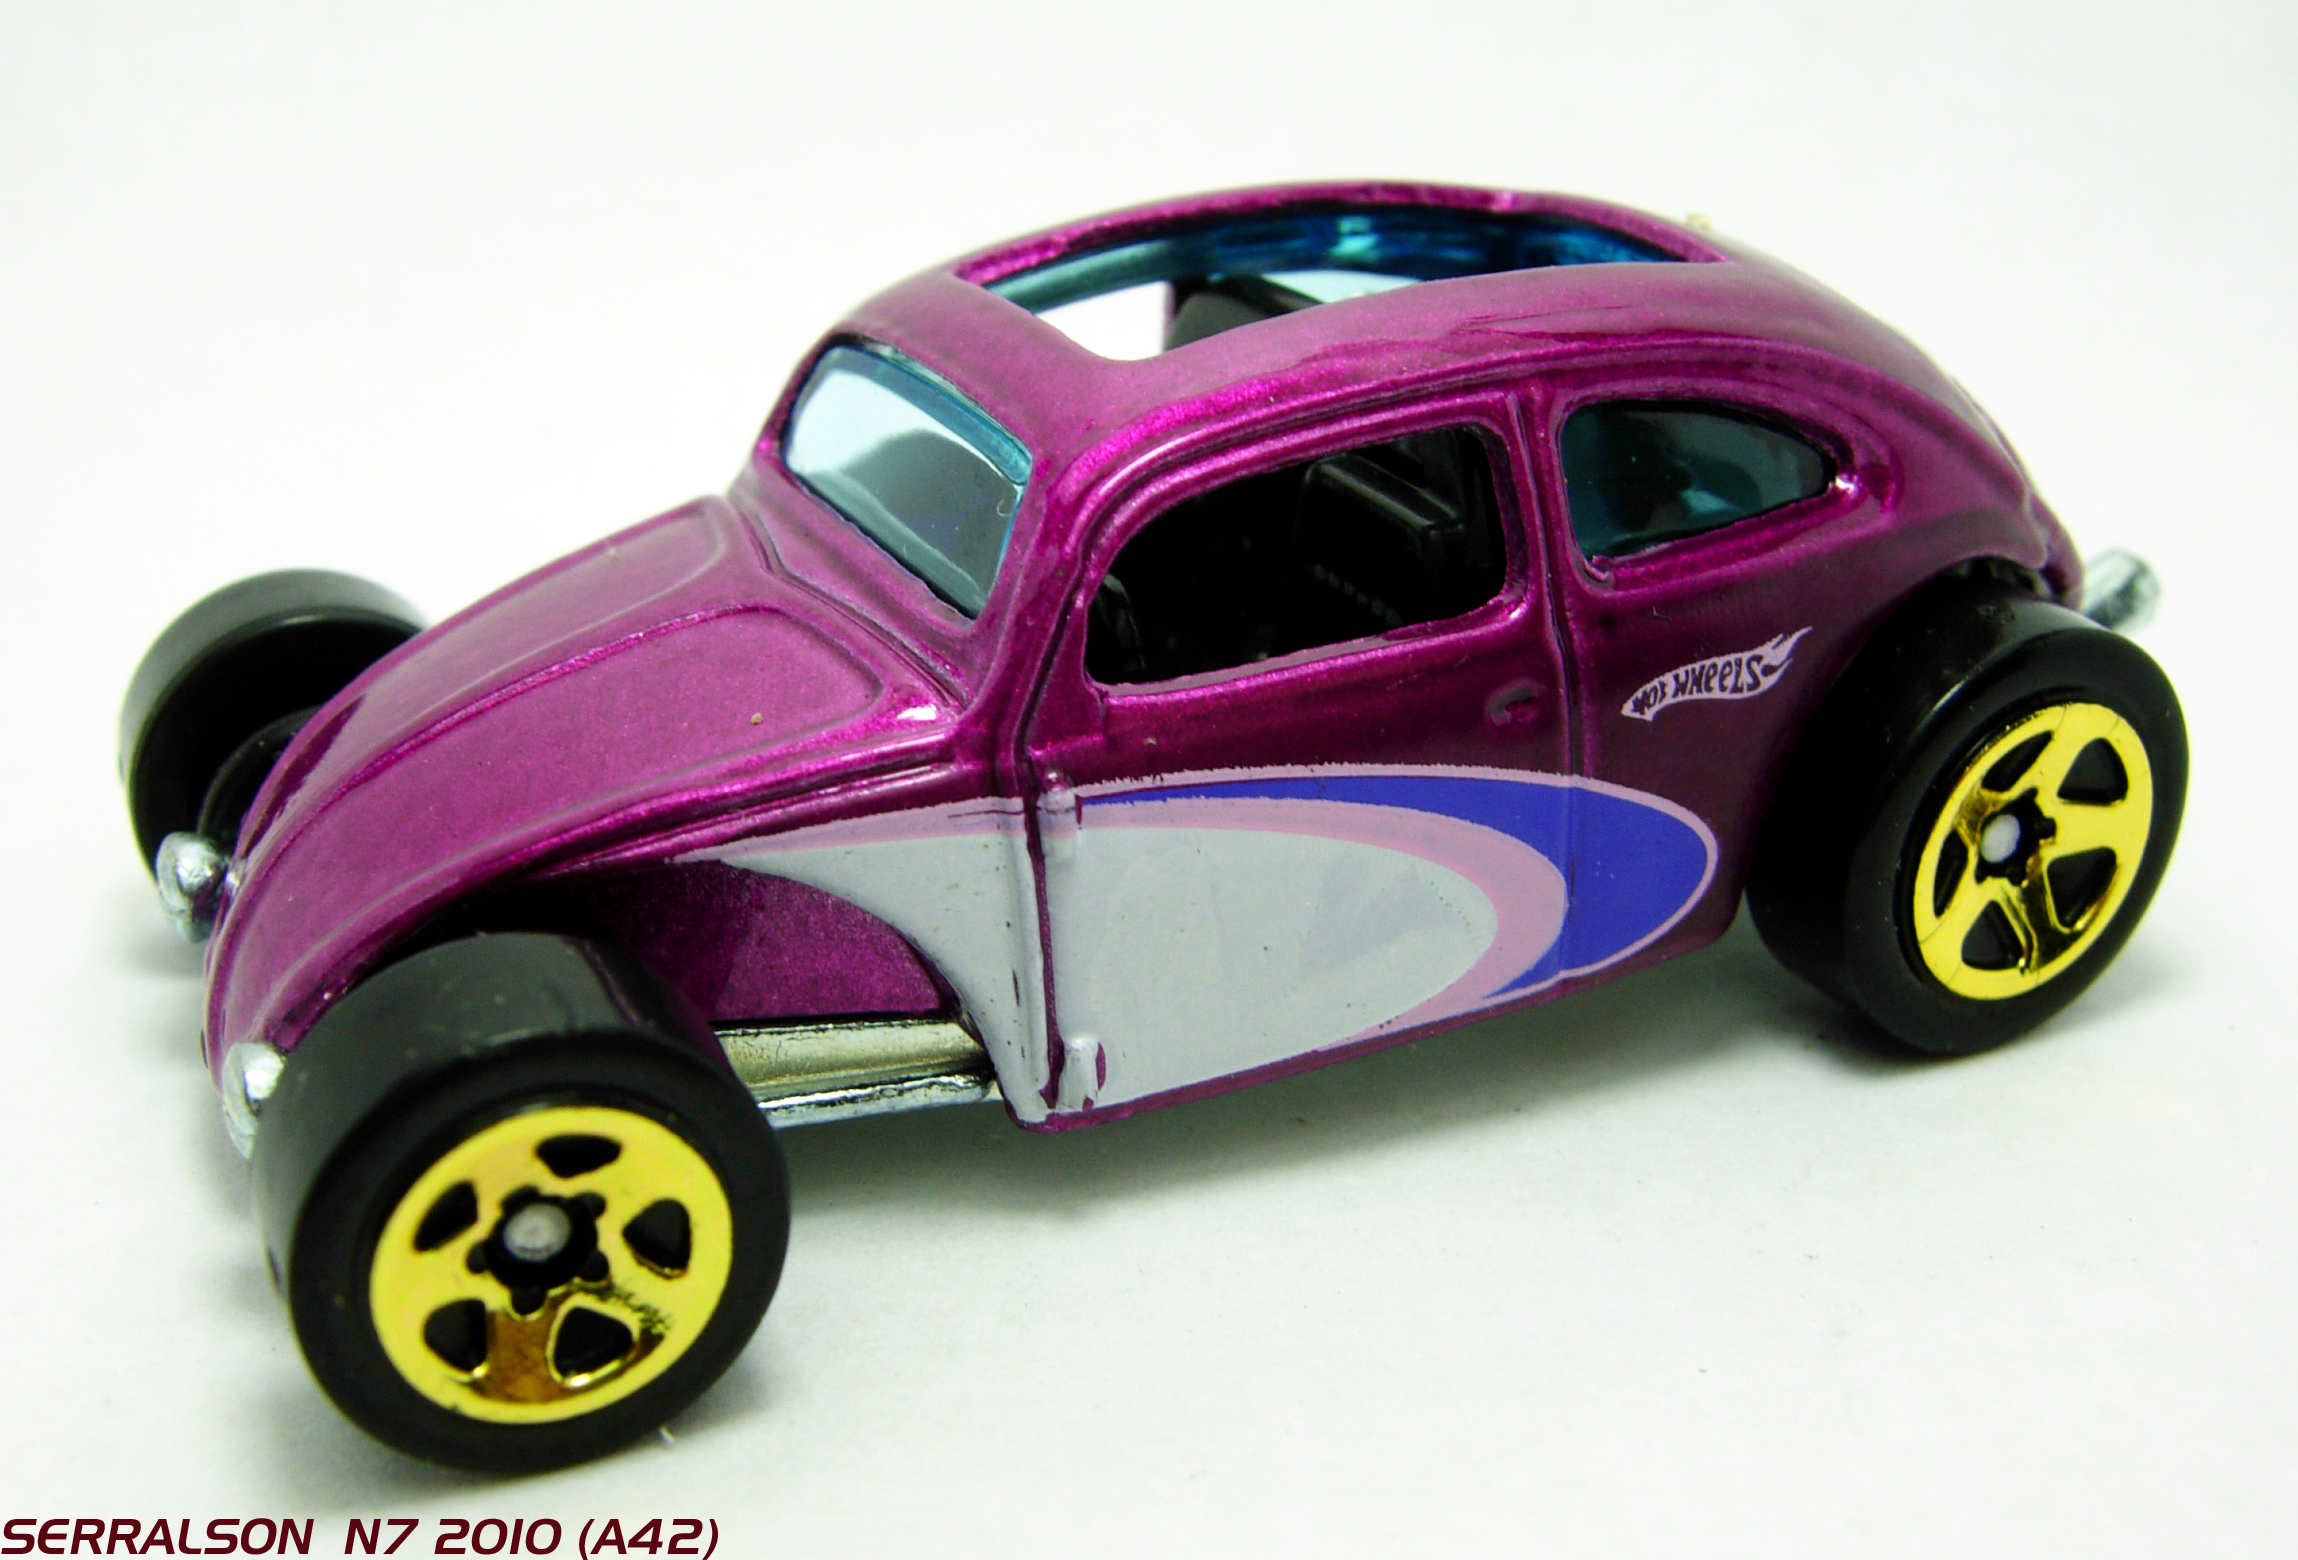 hot wheels custom beetle